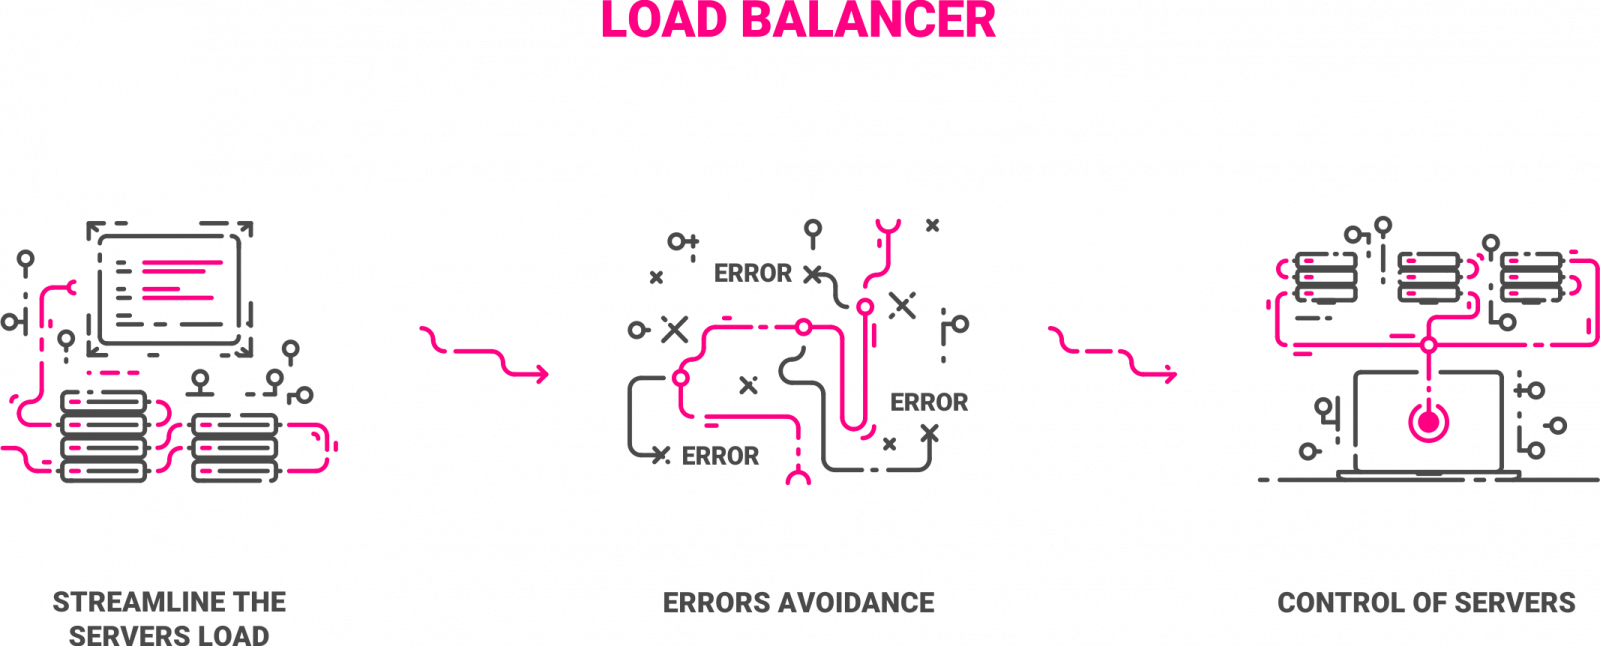 Load Balancer l ASD Blog